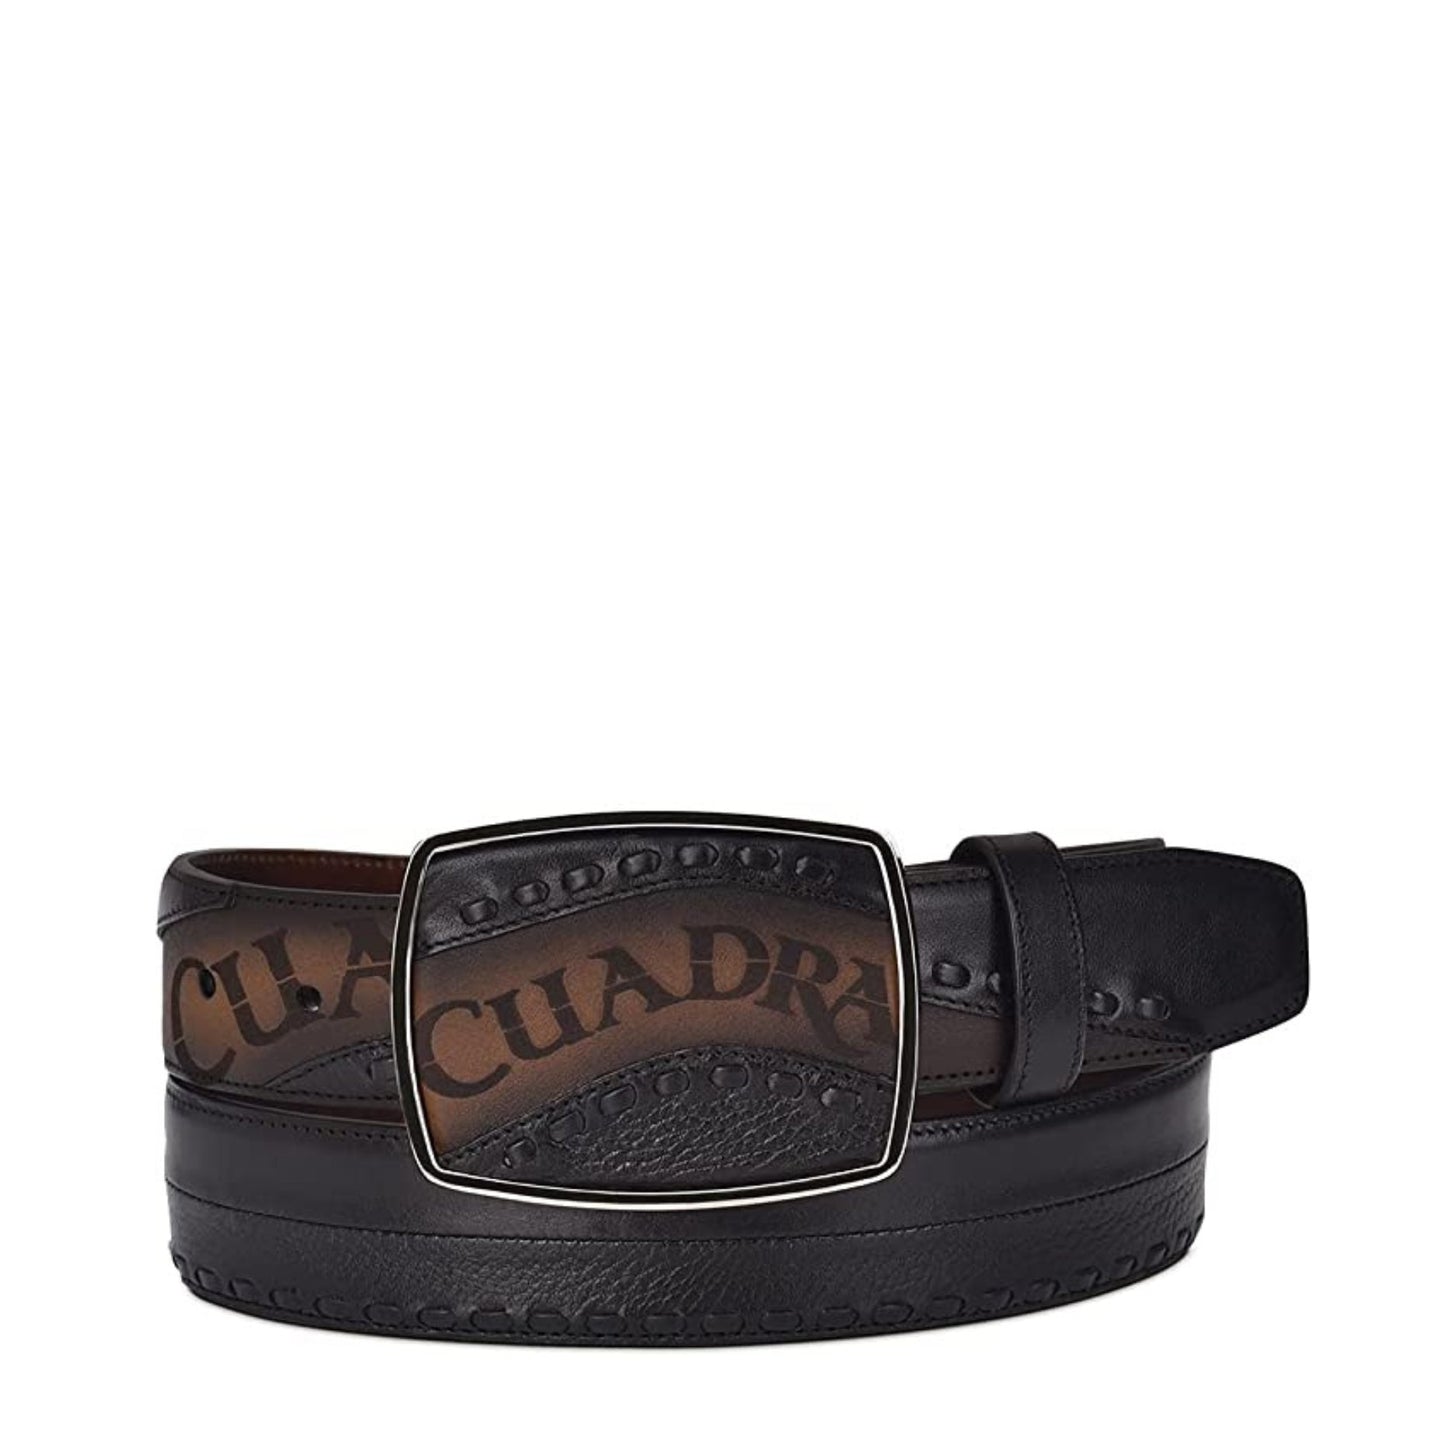 CV487RS - Cuadra black/brown fashion casual cowboy leather belt for men-Kuet.us